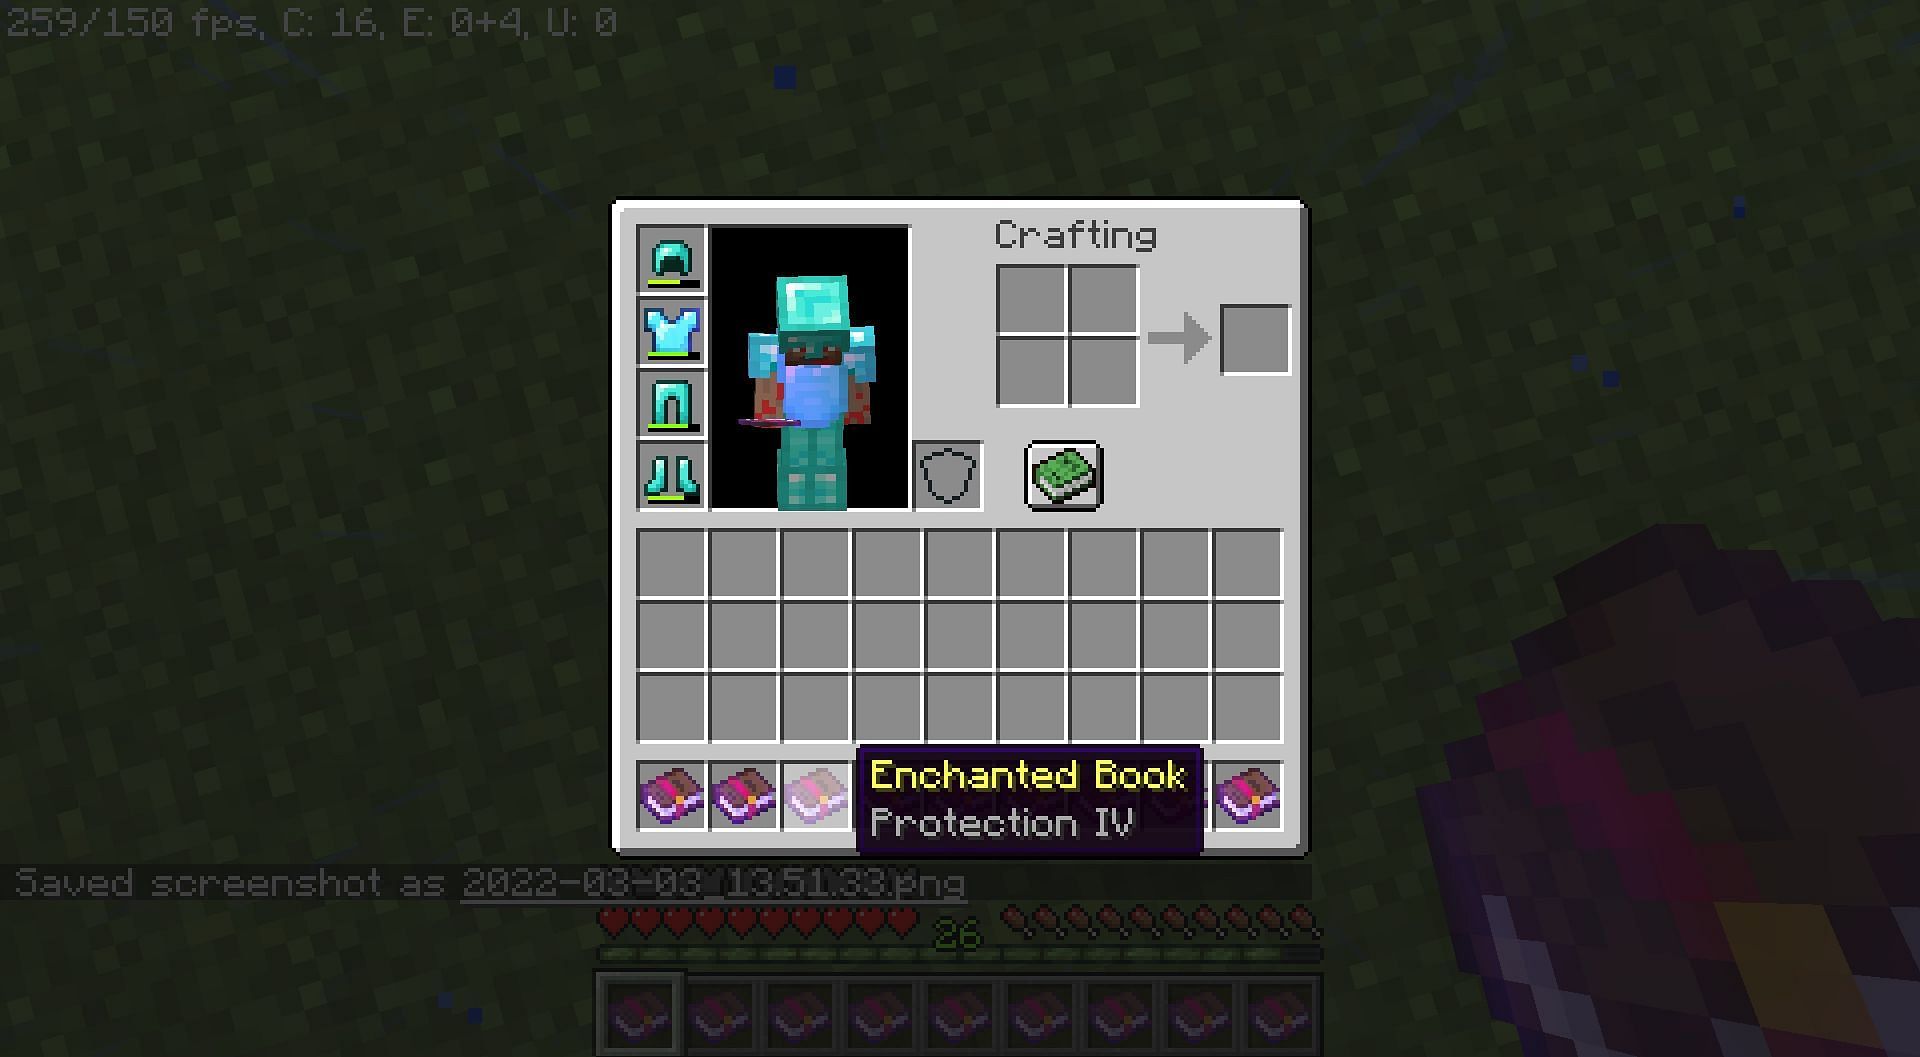 Protection IV (Image via Minecraft)